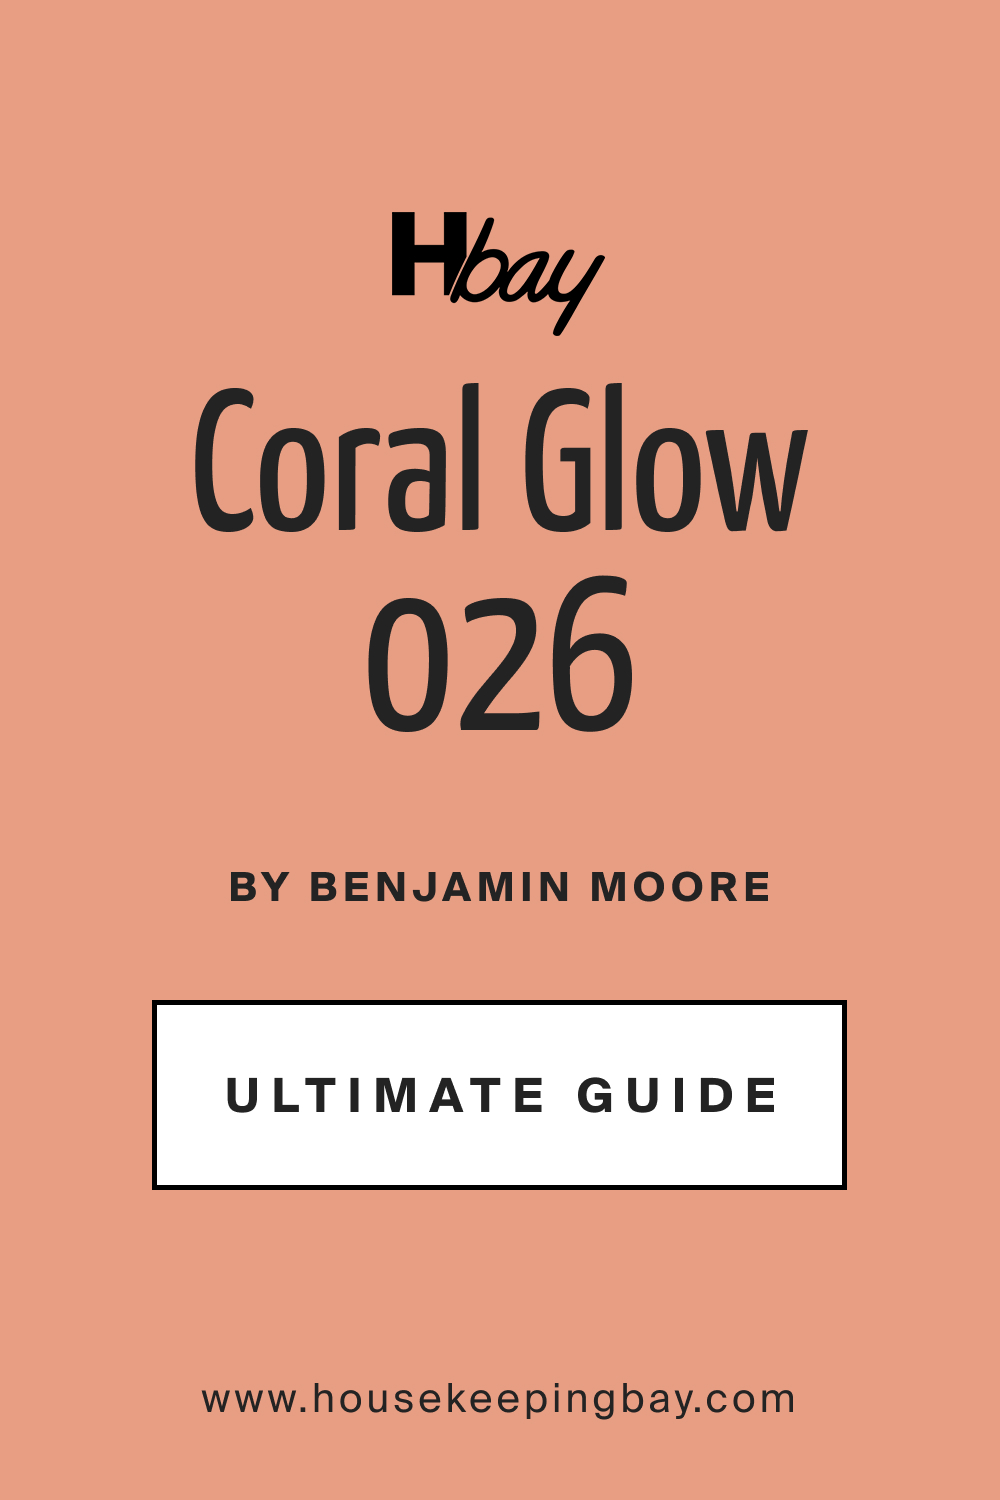 Coral Glow 026 by Benjamin Moore Ultimate Guide